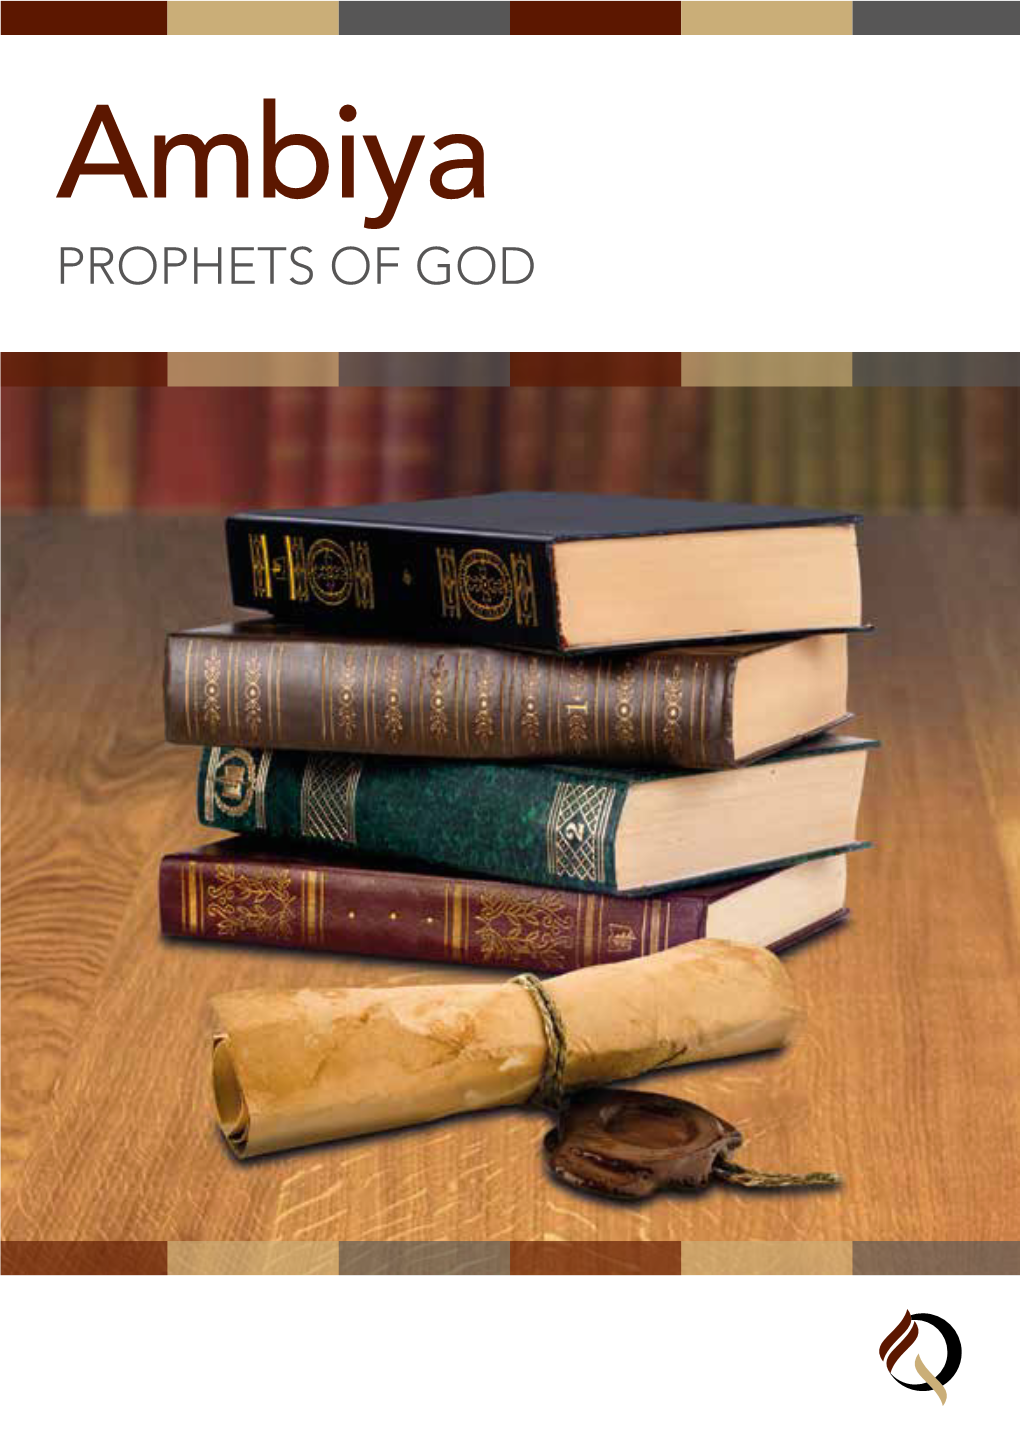 Ambiya PROPHETS of GOD CONTENTS